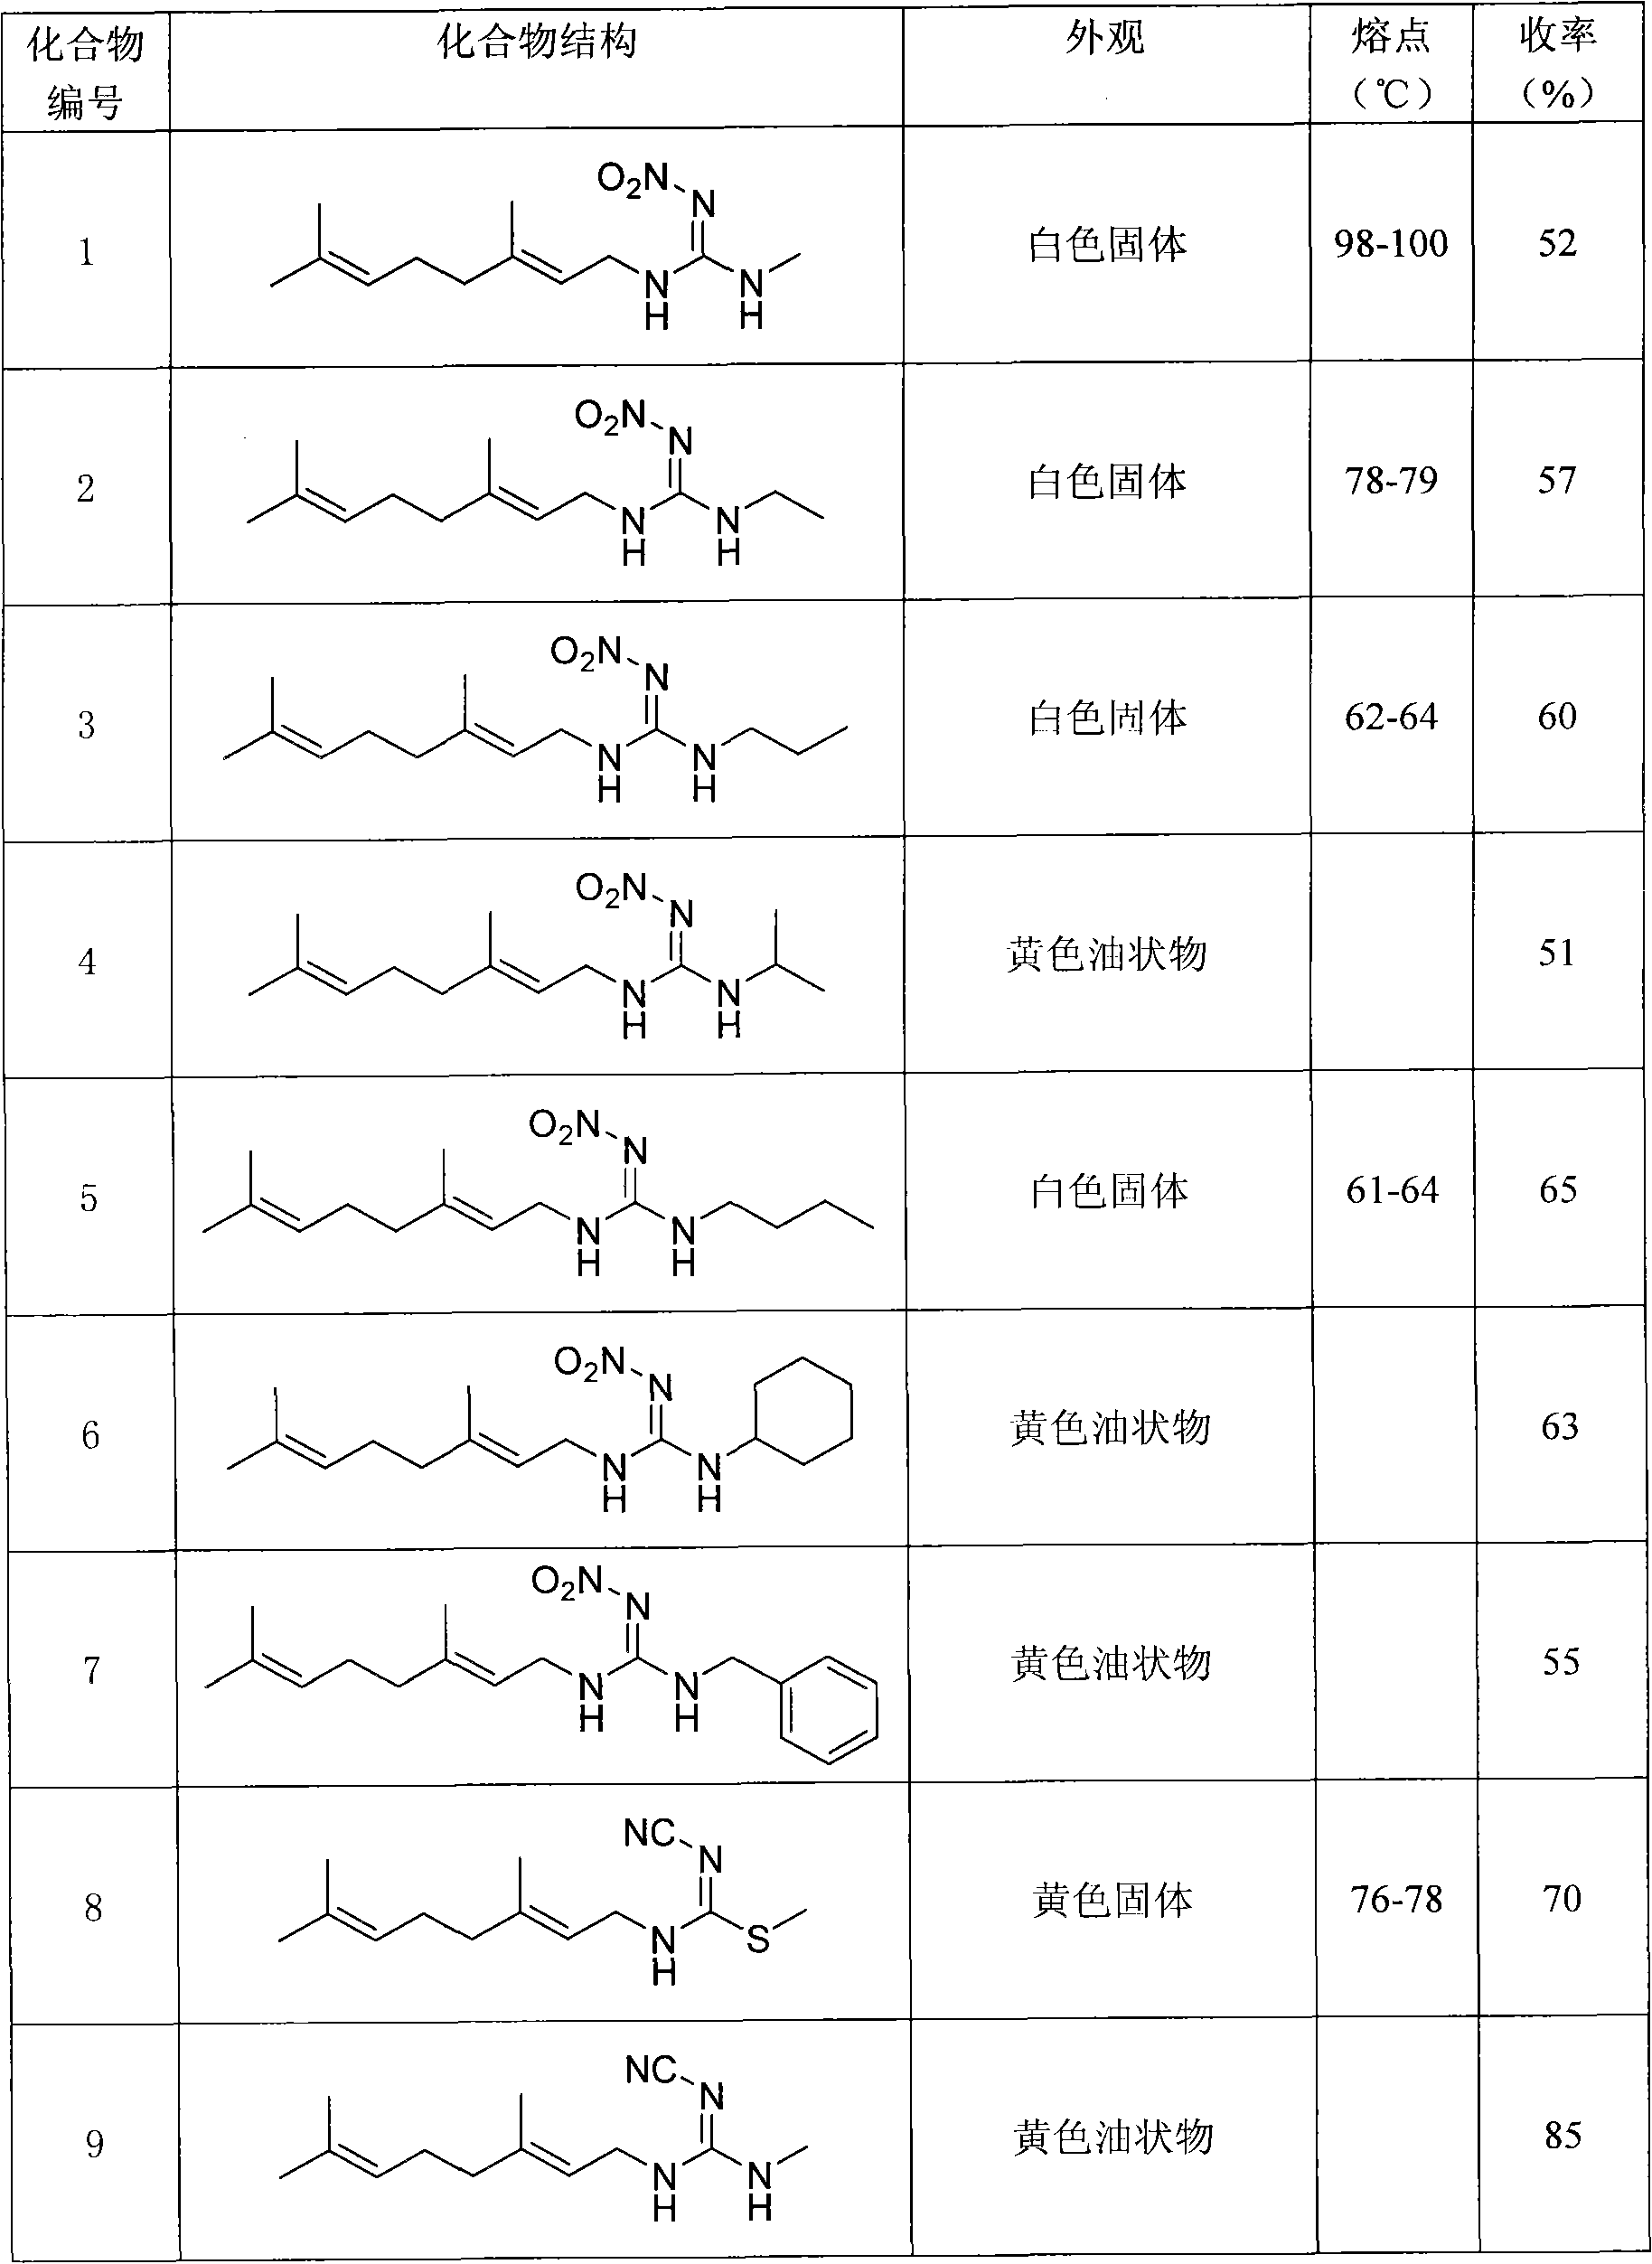 Anti-beta-farnesene analog containing guanidine or nitro-ethylene as well as preparation method and applications thereof